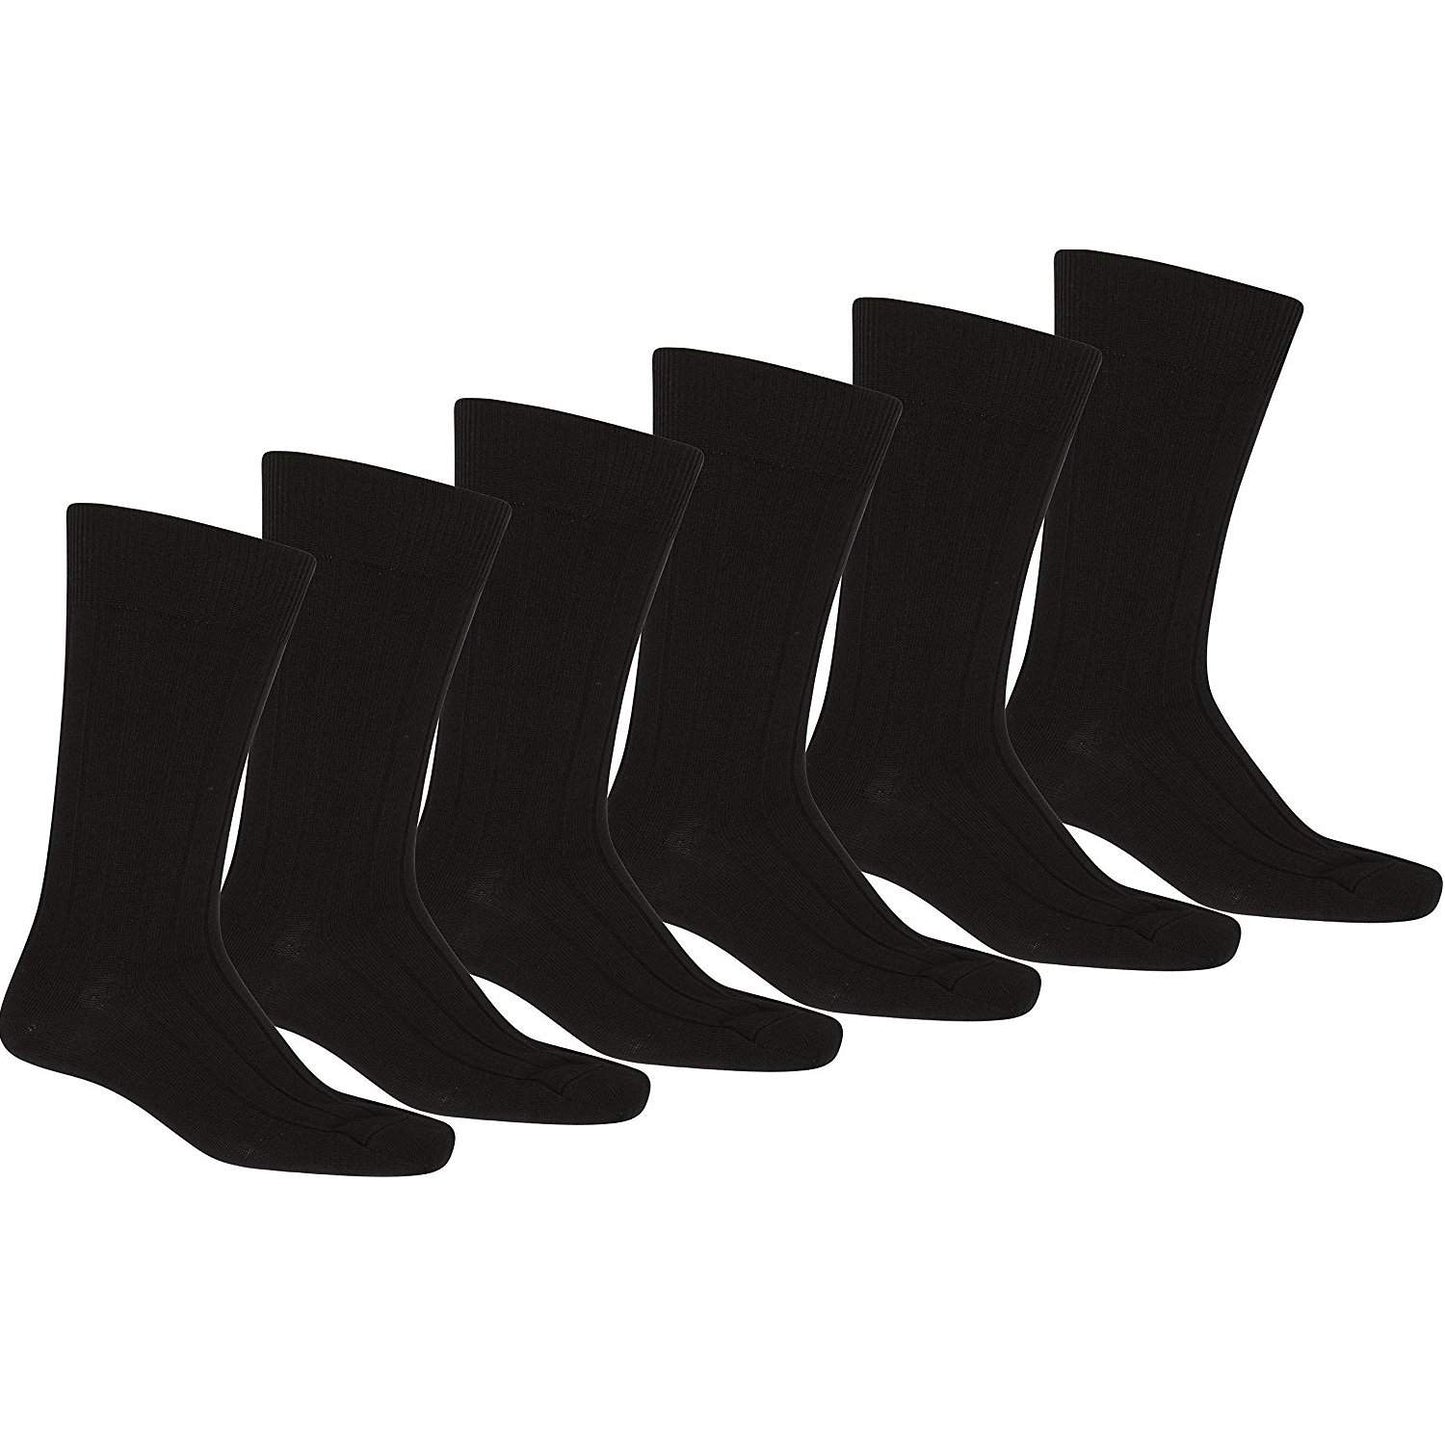 Pack of 100 Unisex Solid Plain Dress Socks - Bulk Wholesale Lot